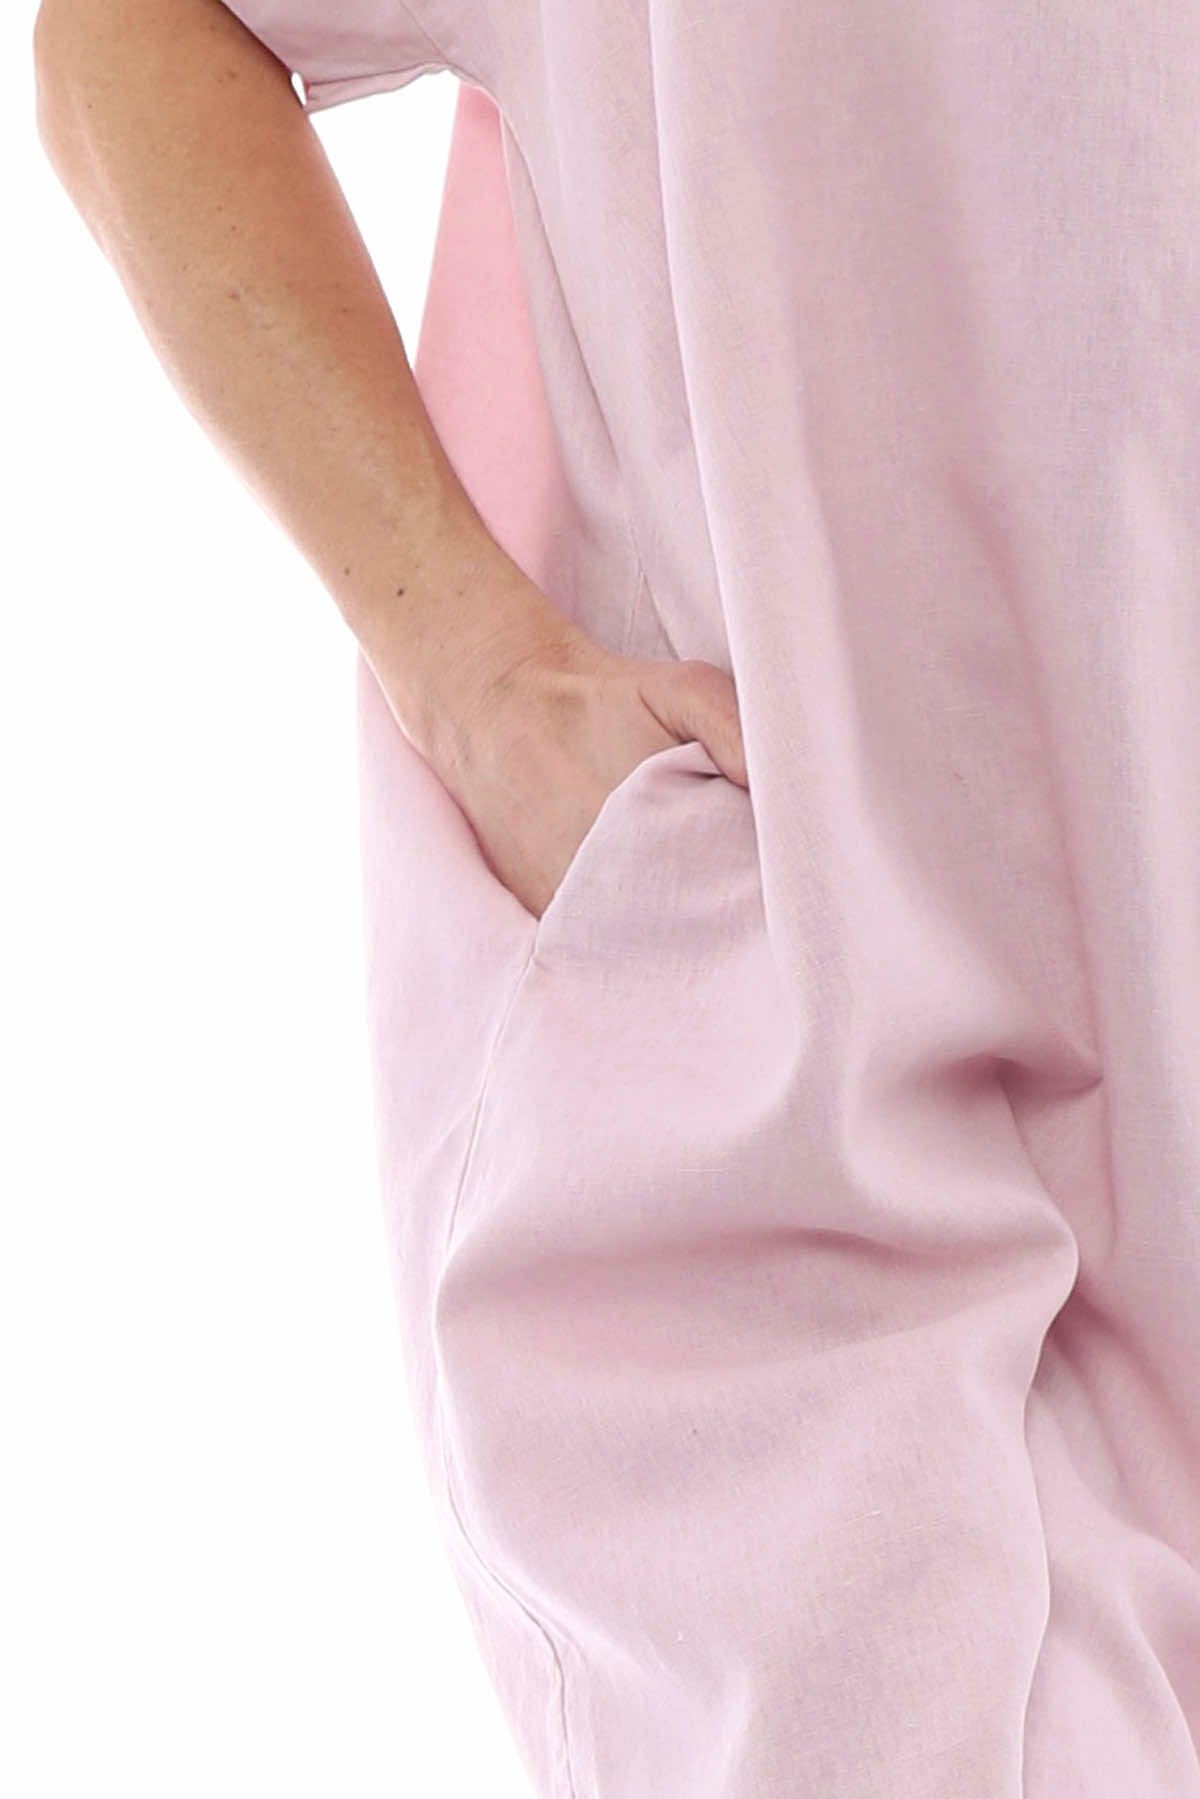 Lelia Washed Linen Tunic Pink